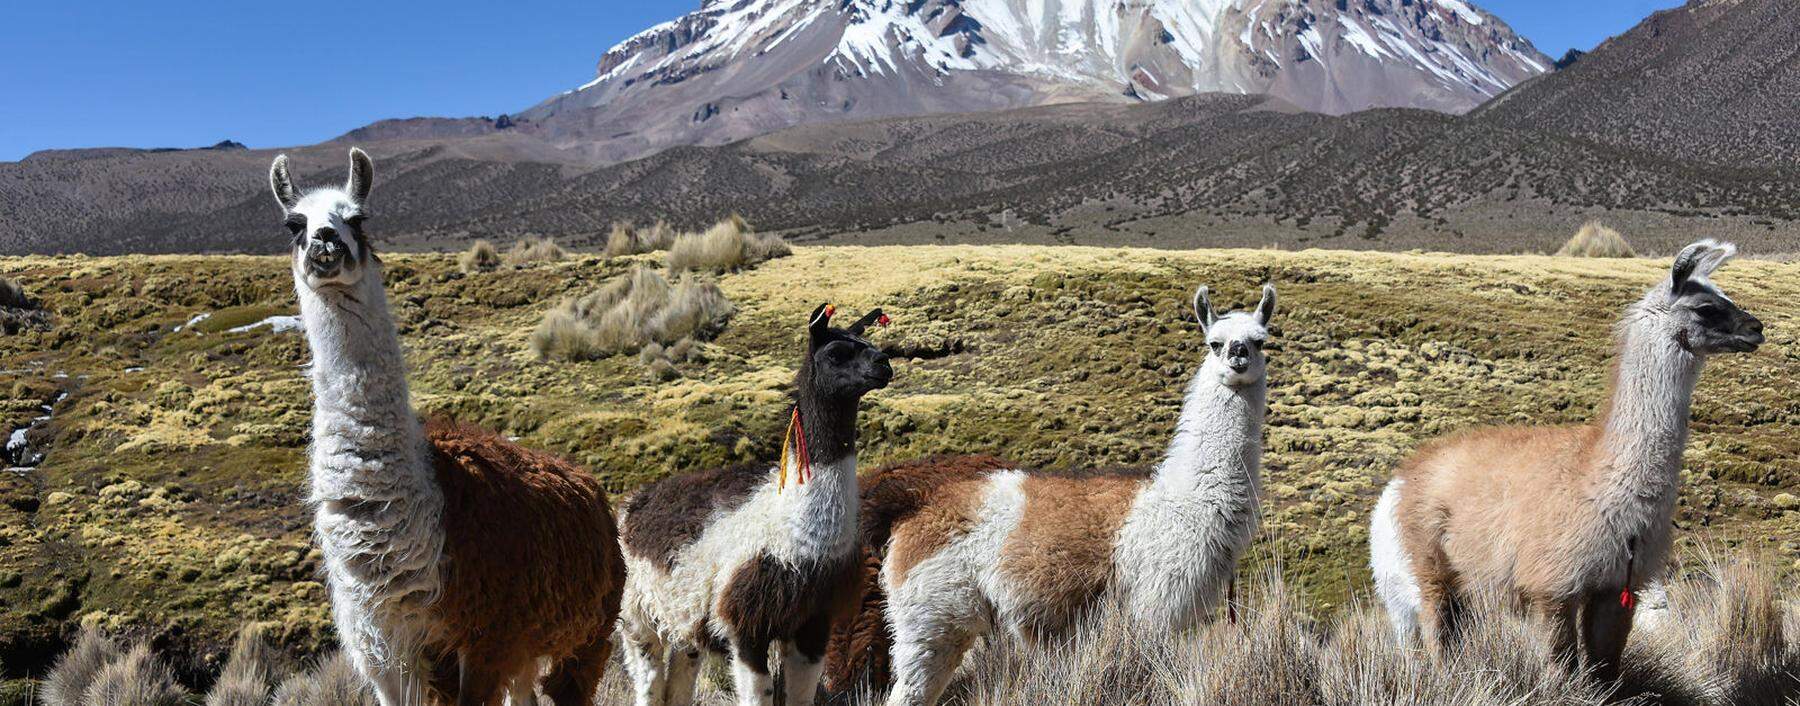 Lamas lama glama vor Vulkan Sajama mit Schnee bedeckt Sajama Nationalpark Altiplano Bolivien